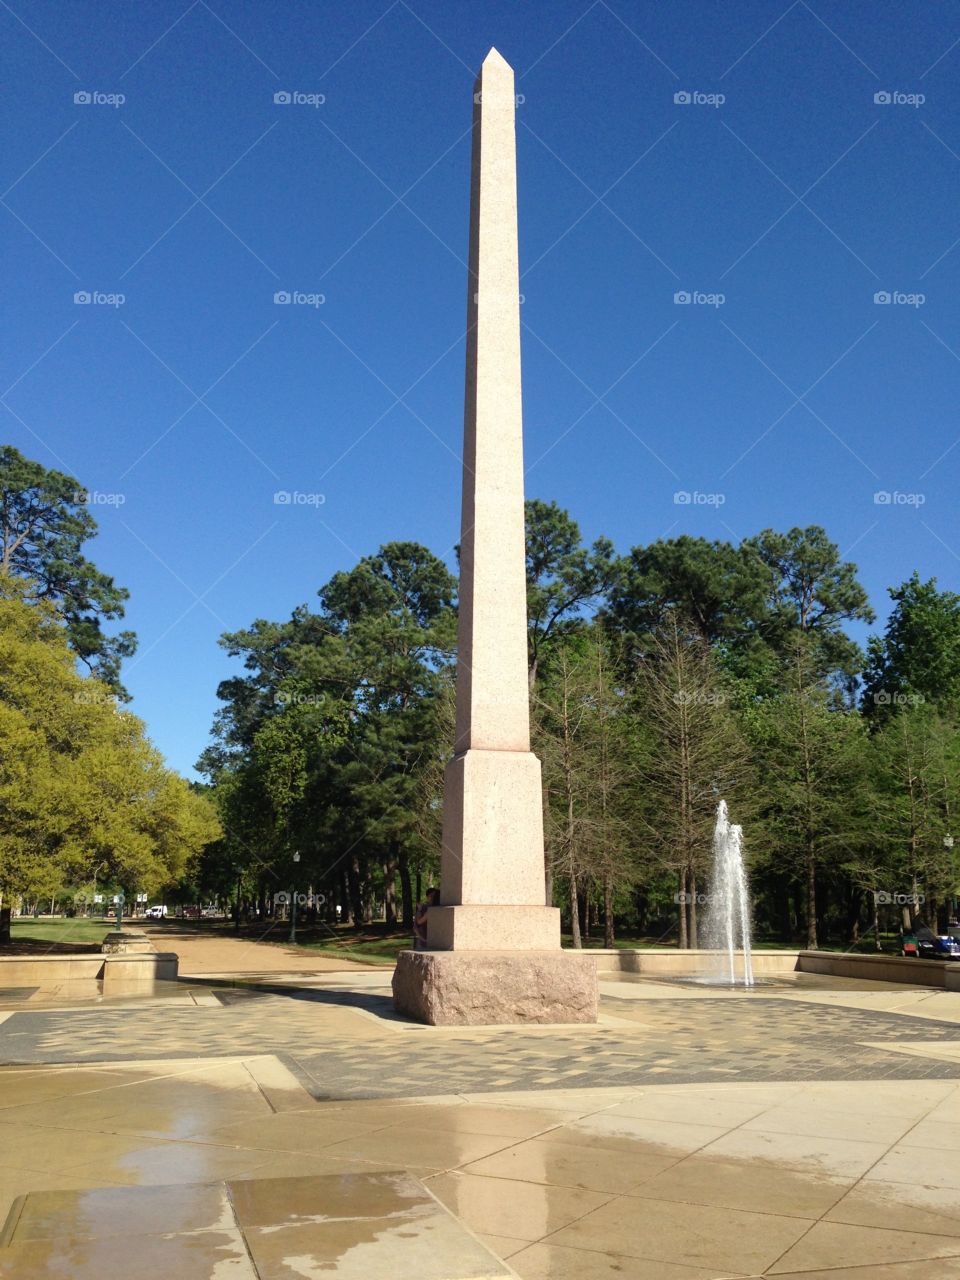 Washington monument replica?